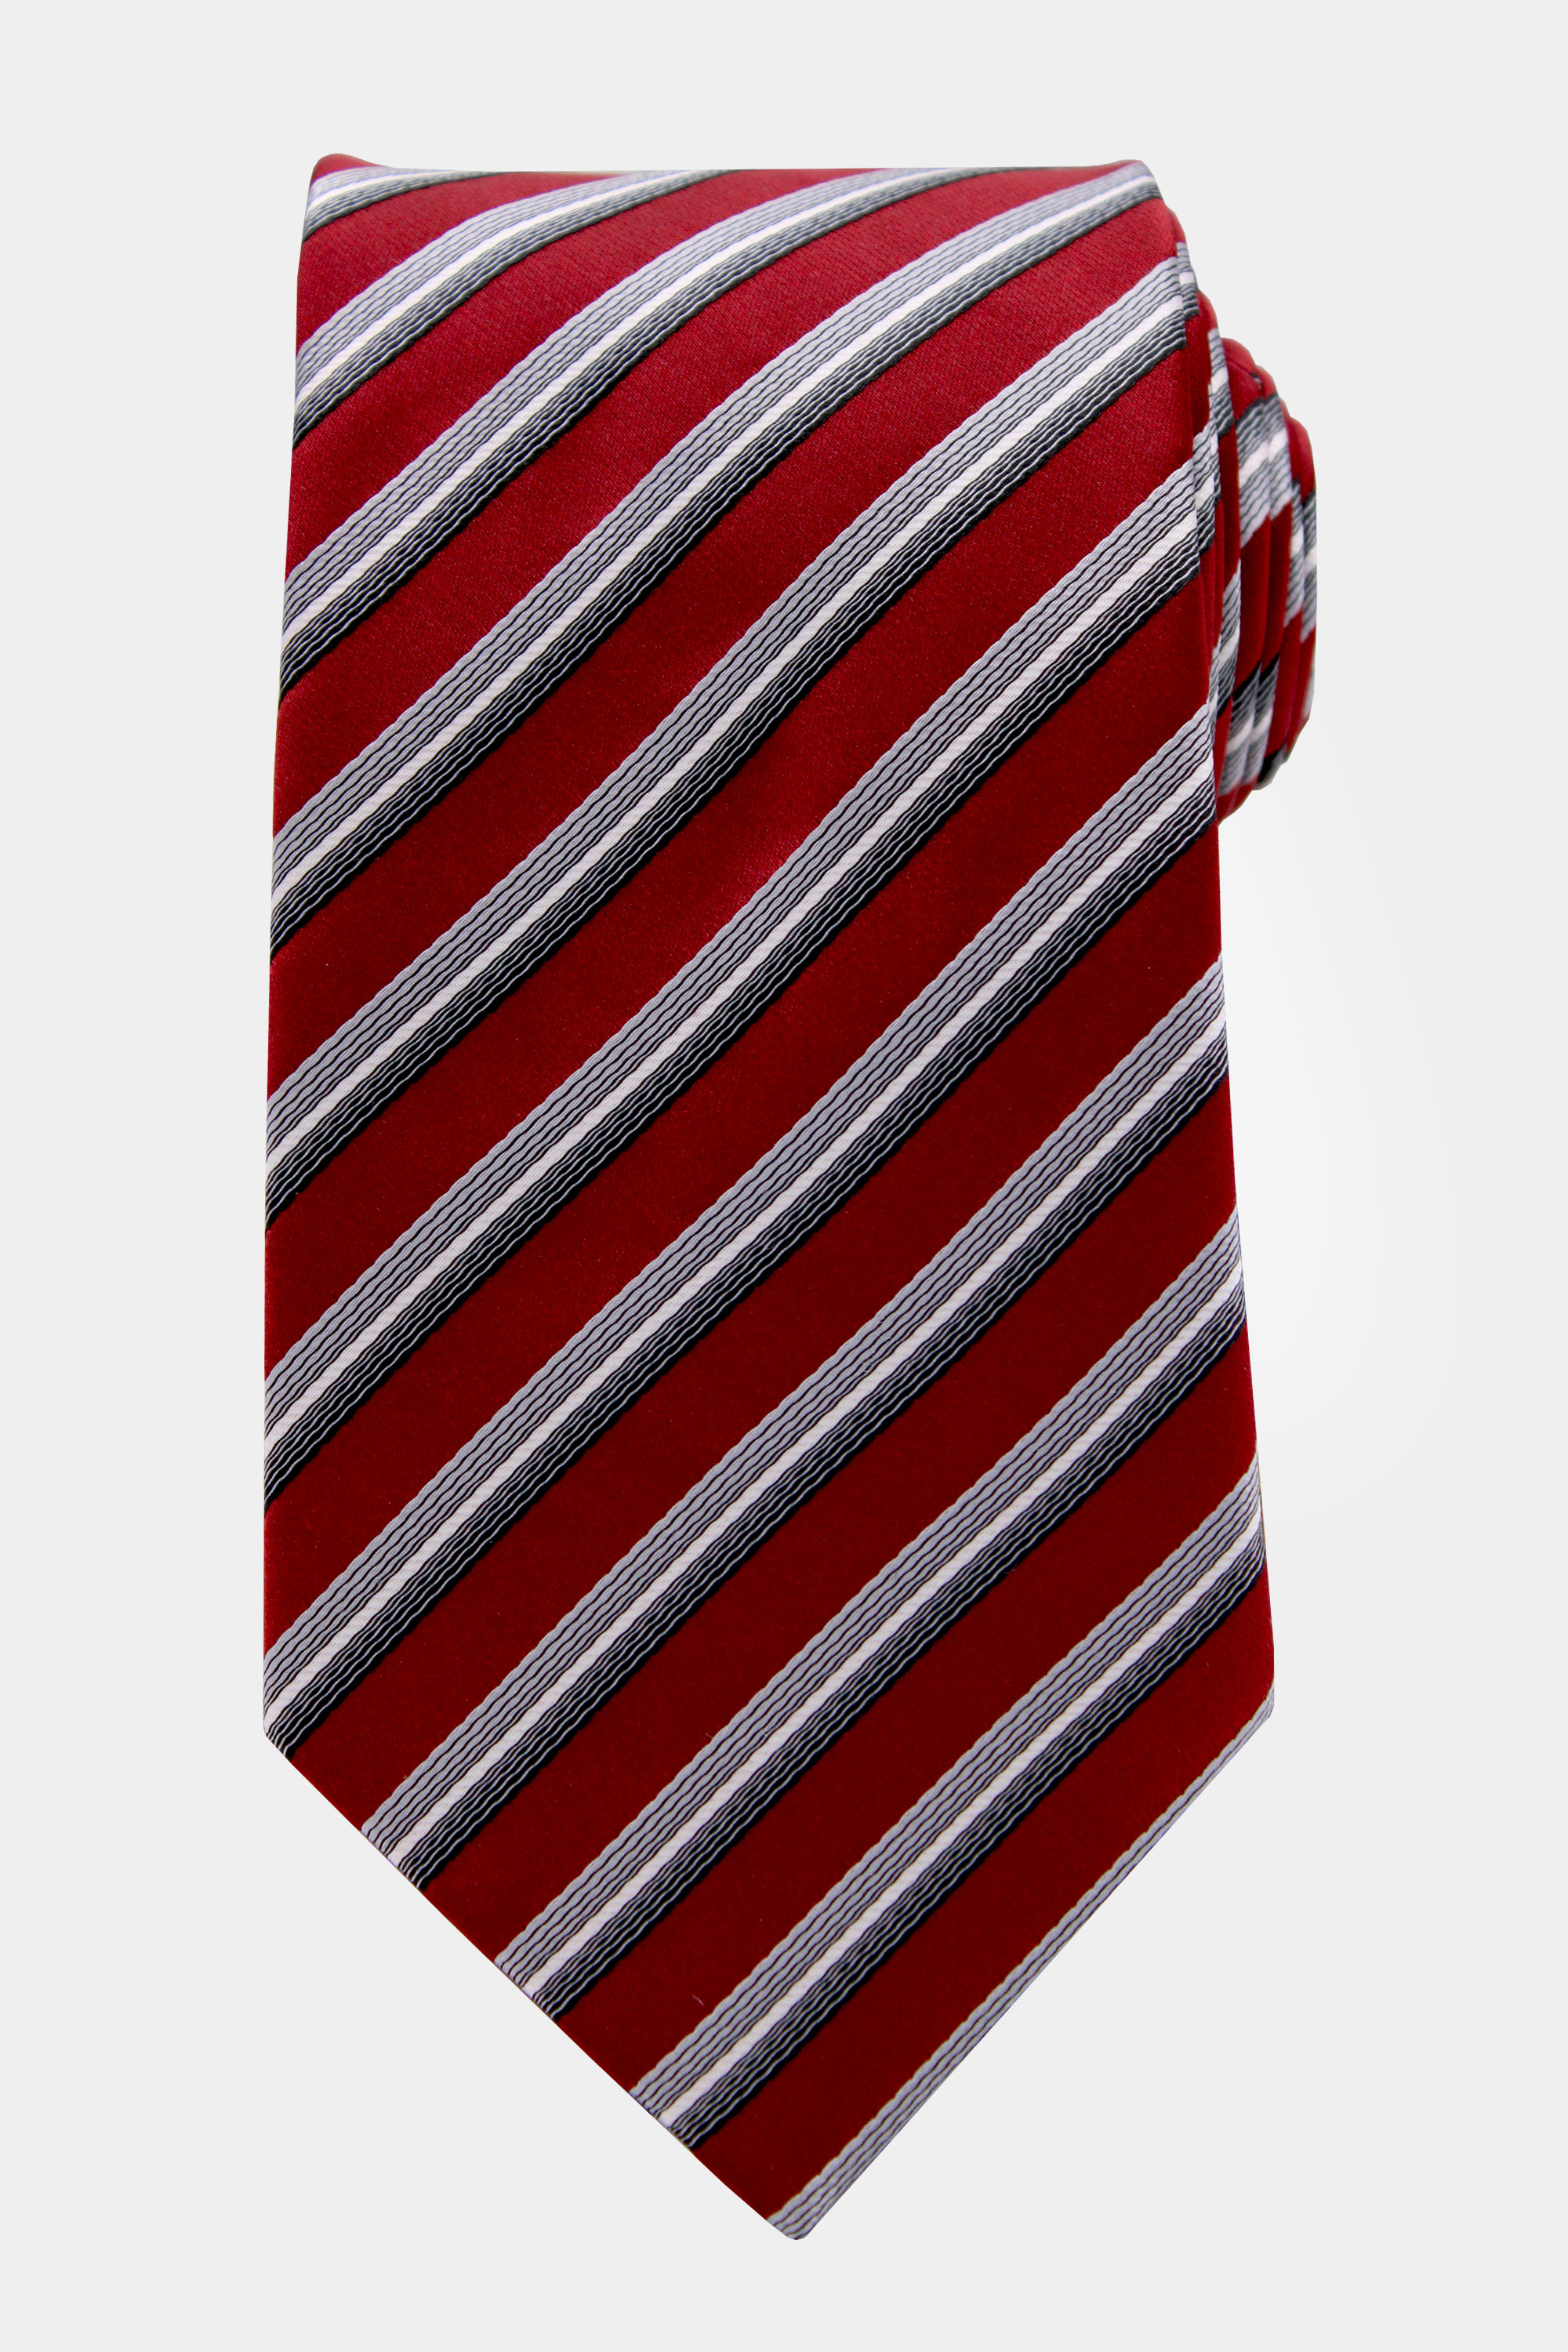 Maroon-Burgundy-Striped-Tie-from-Gentlemansguru.com